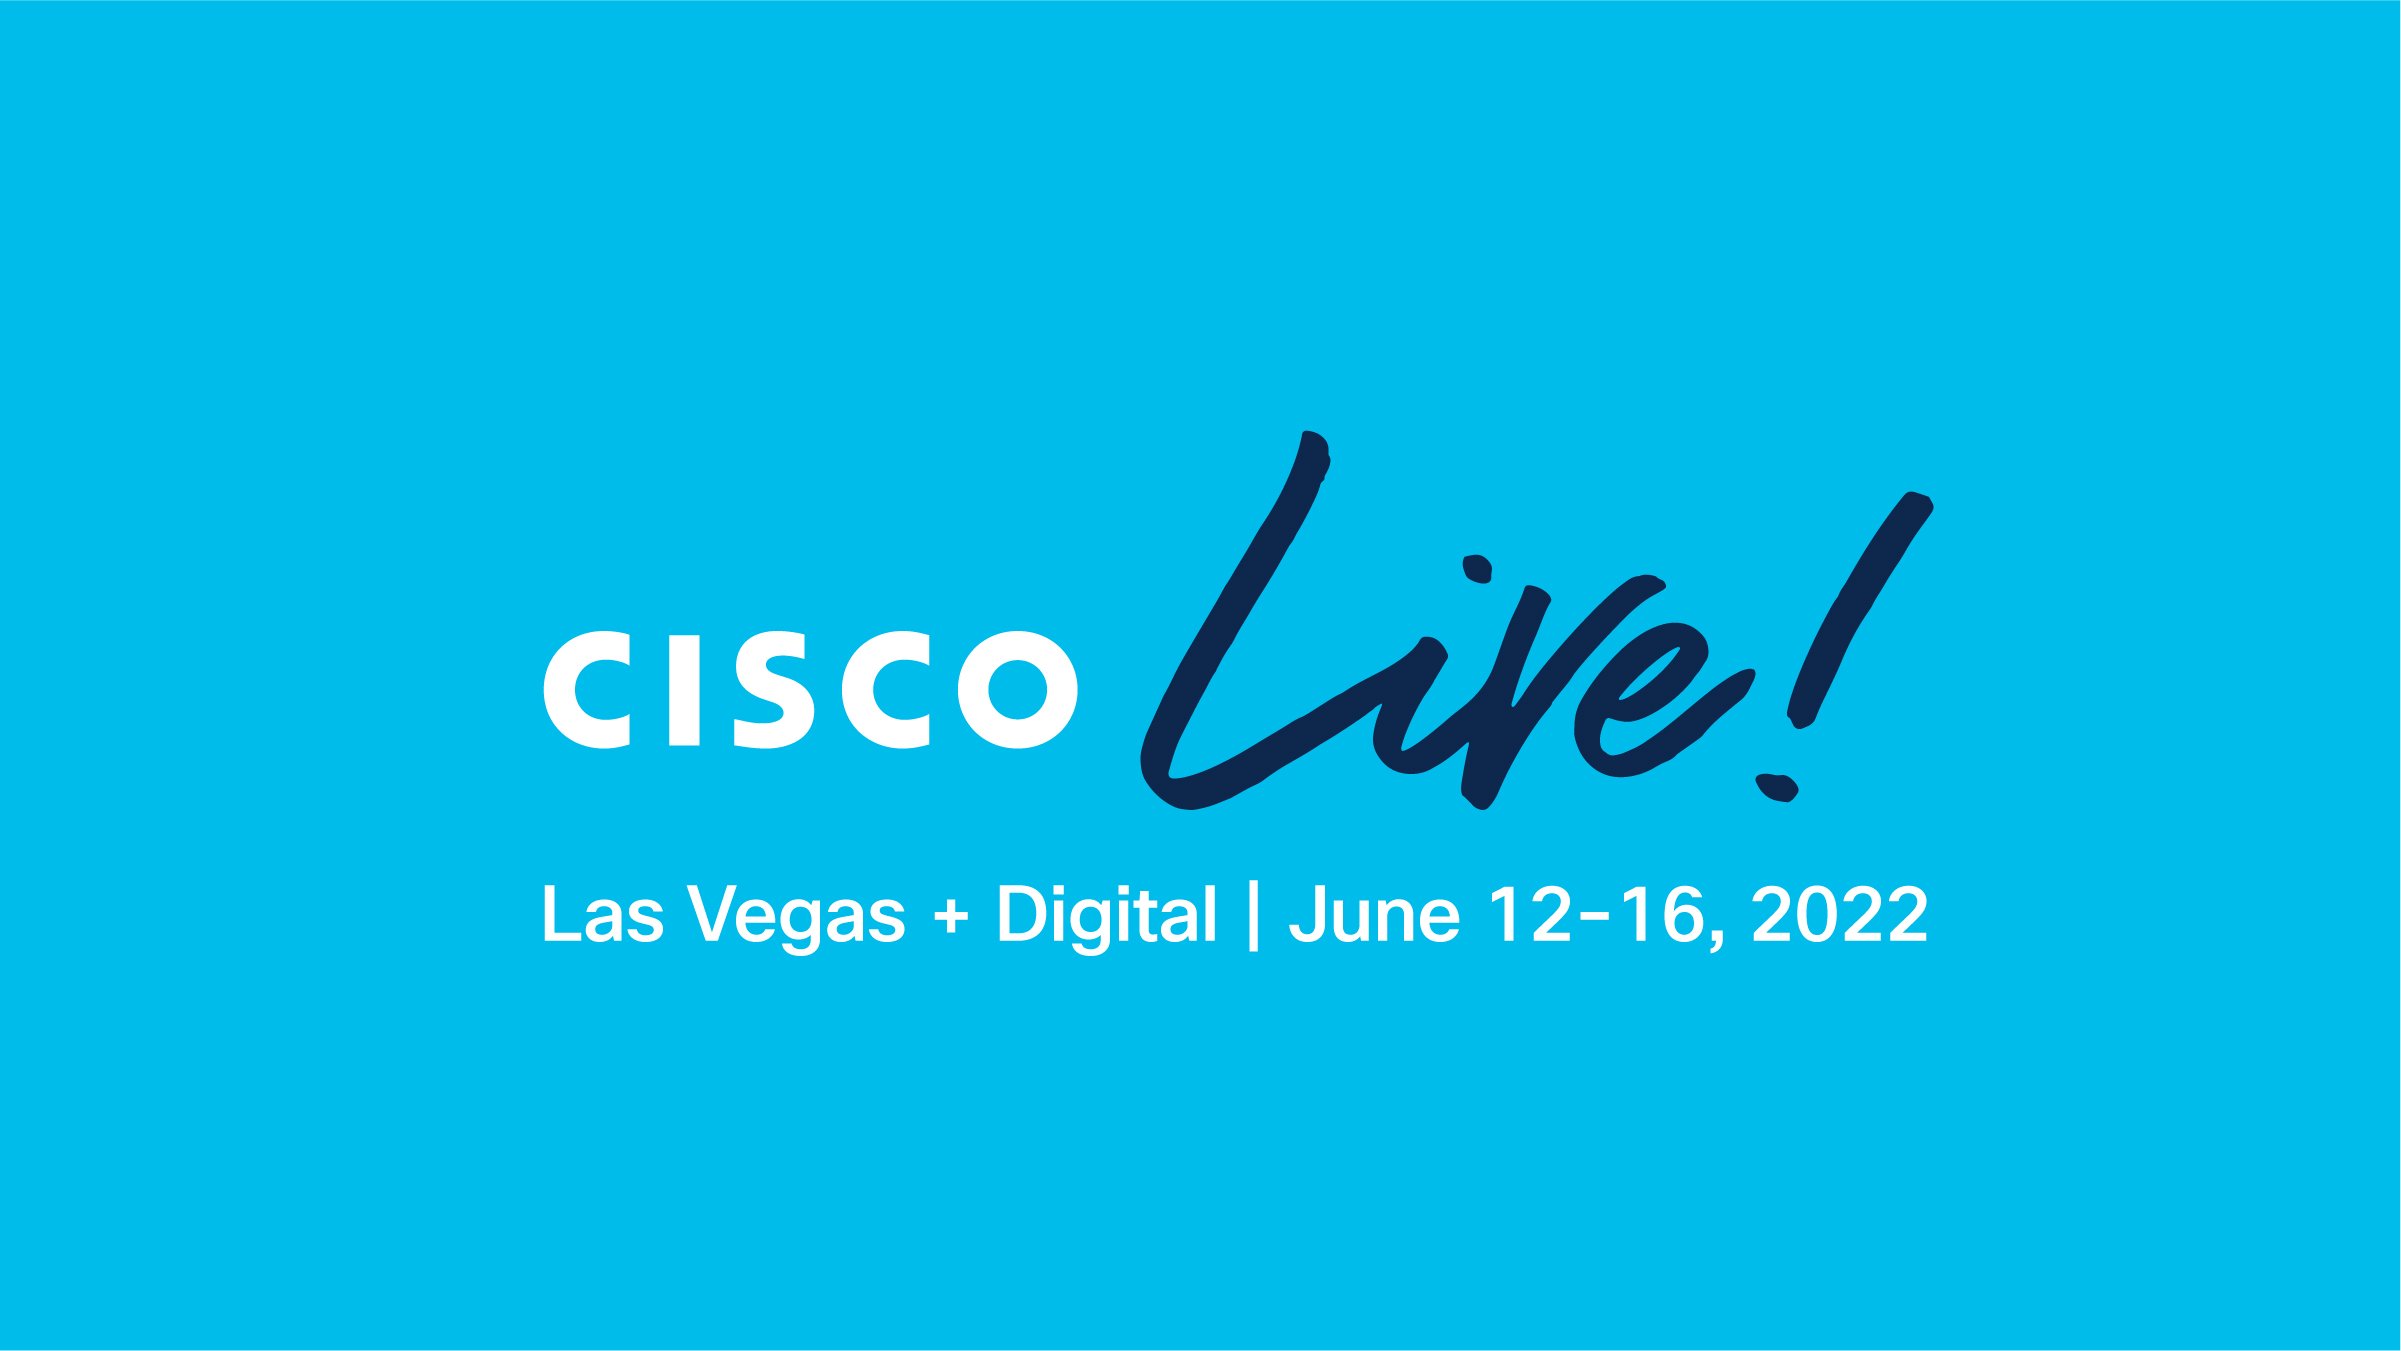 Cisco Live 2022: a Showcase of Workplace Innovation